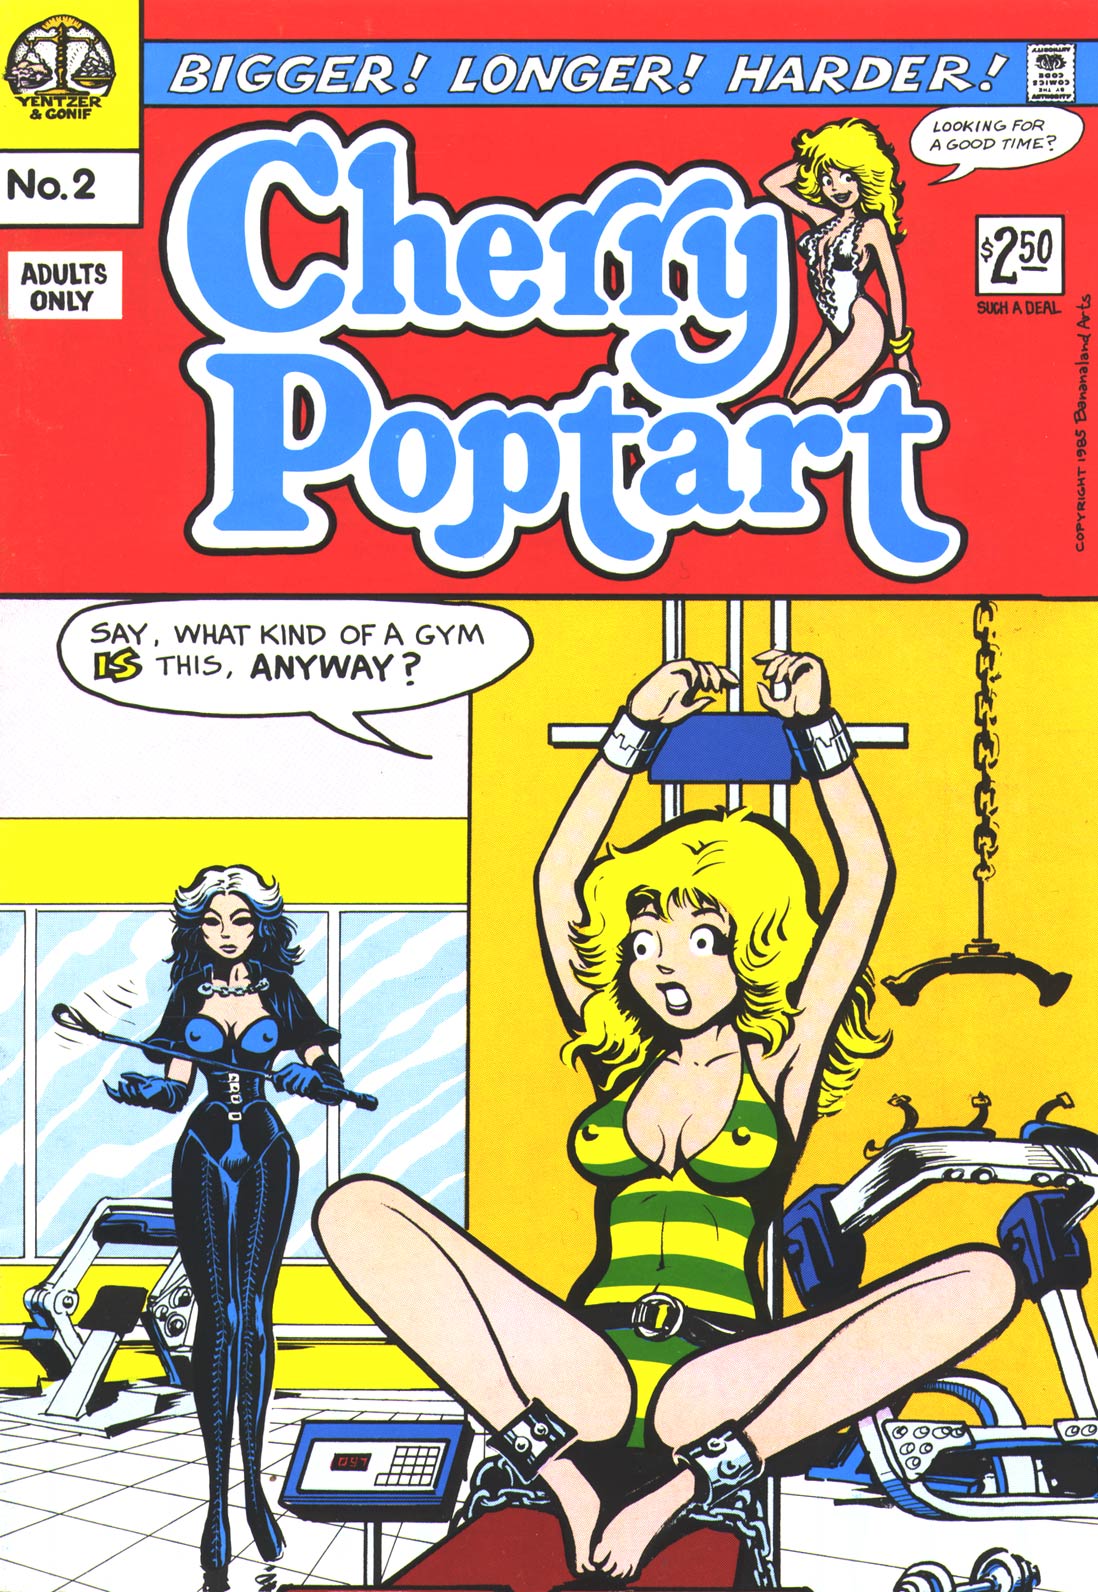 1098px x 1592px - PORNOFOKKER: - - - CHERRY POPTART - - - # 1 / 2 / 3 - - -